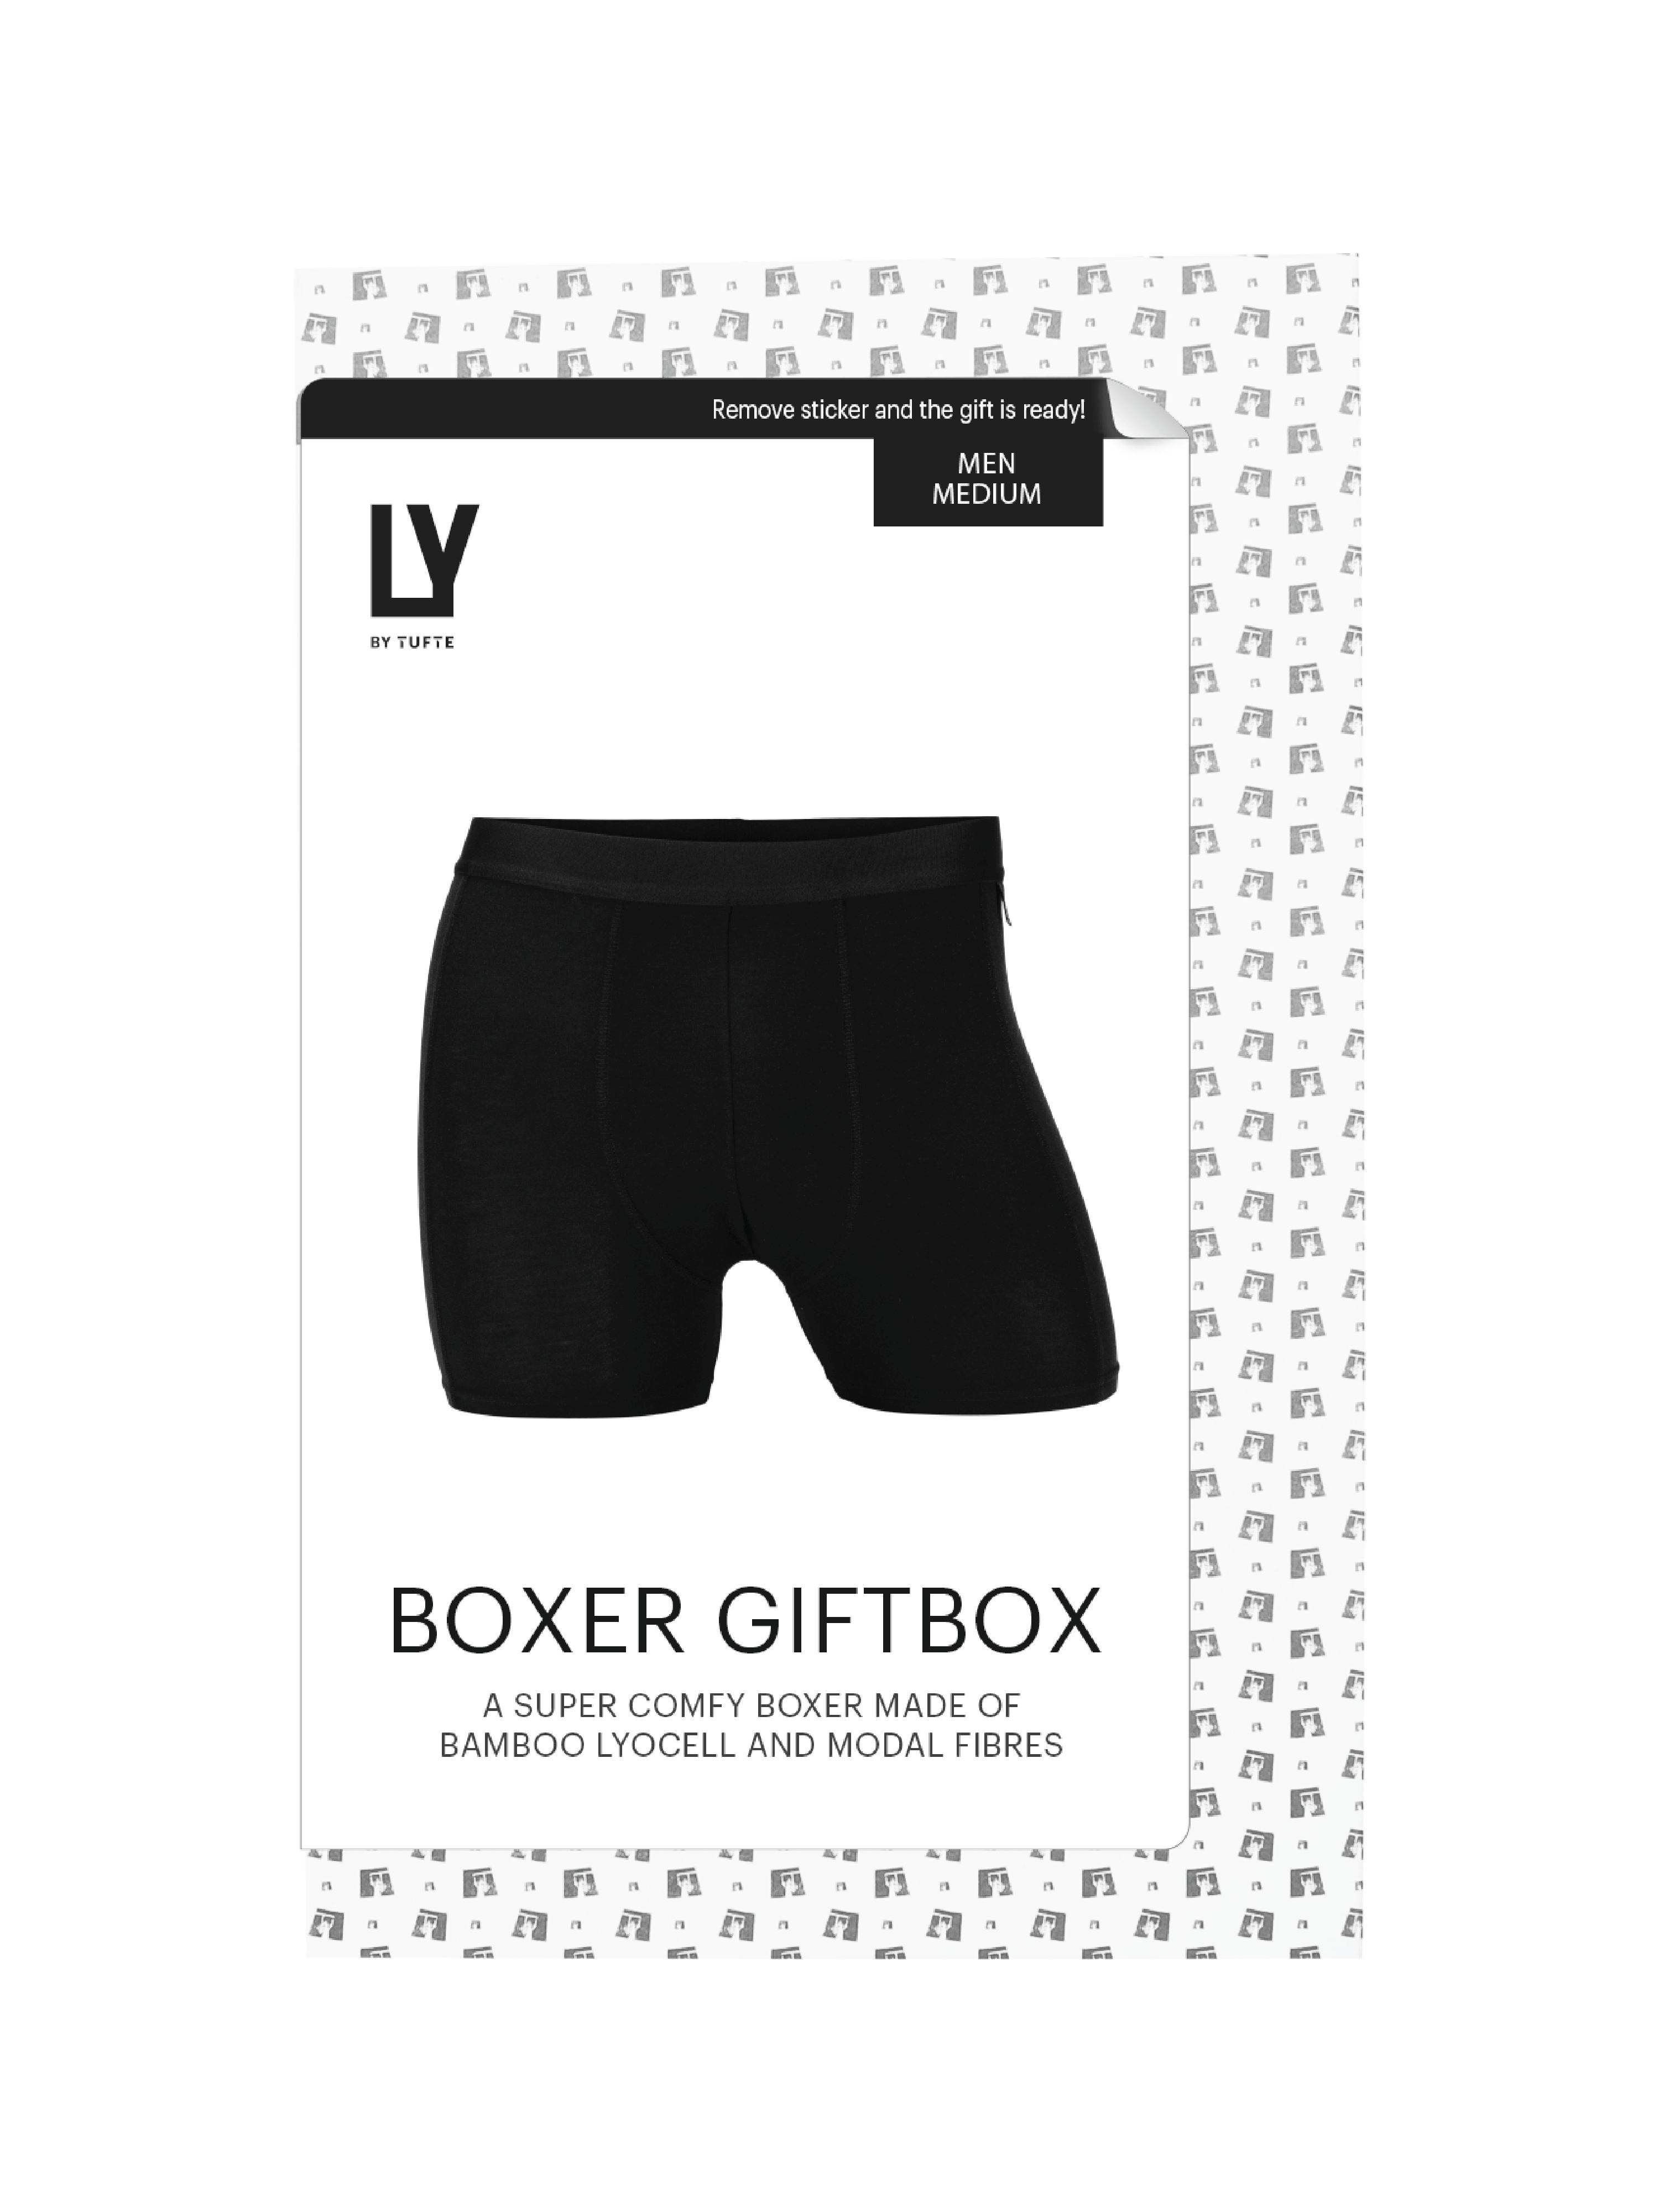 LY by Tufte Boxer Giftbox Black, Størrelse M, 1 stk.